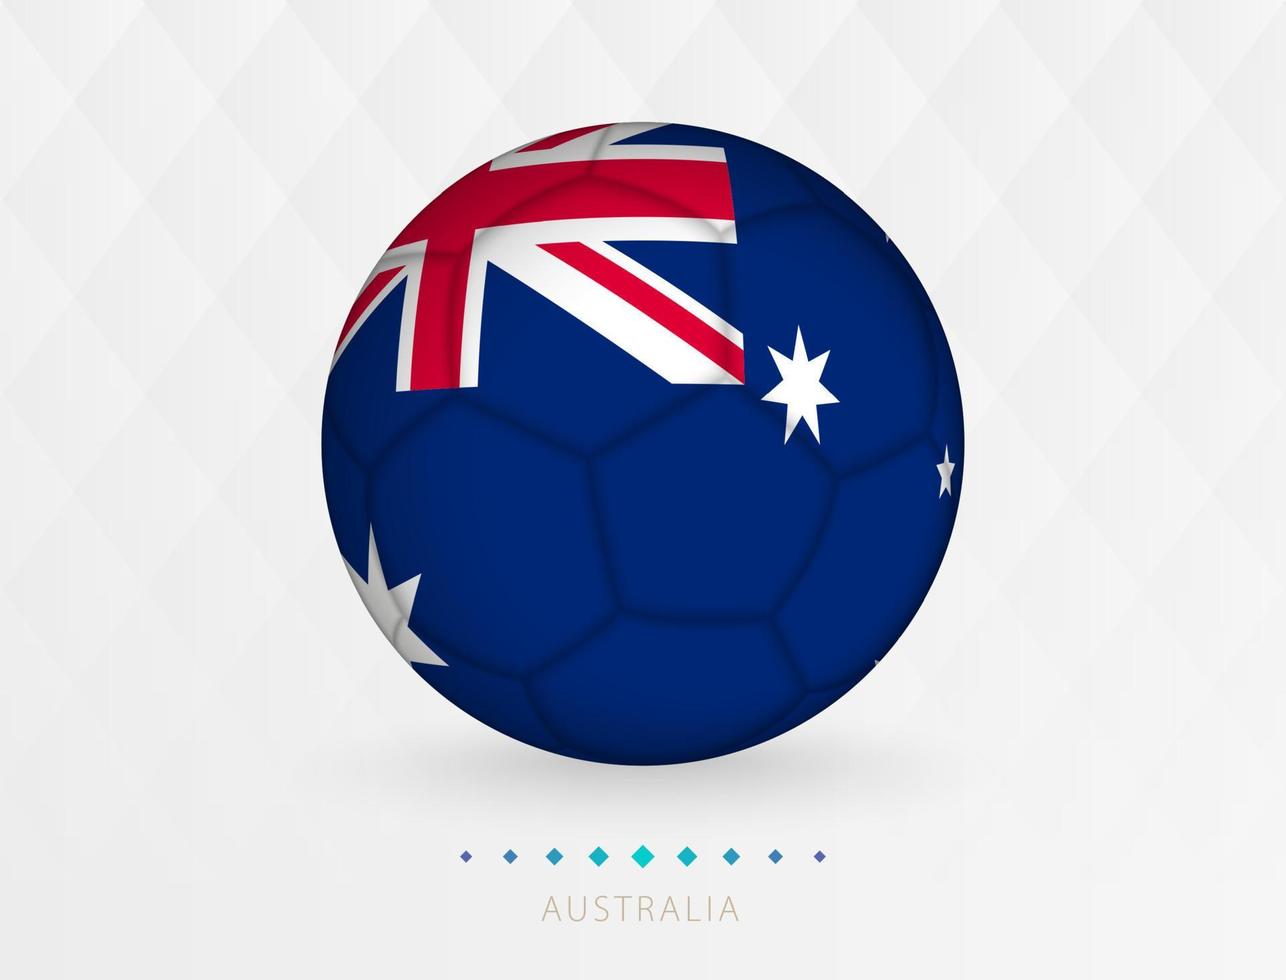 Football ball with Australia flag pattern, soccer ball with flag of Australia national team. vector